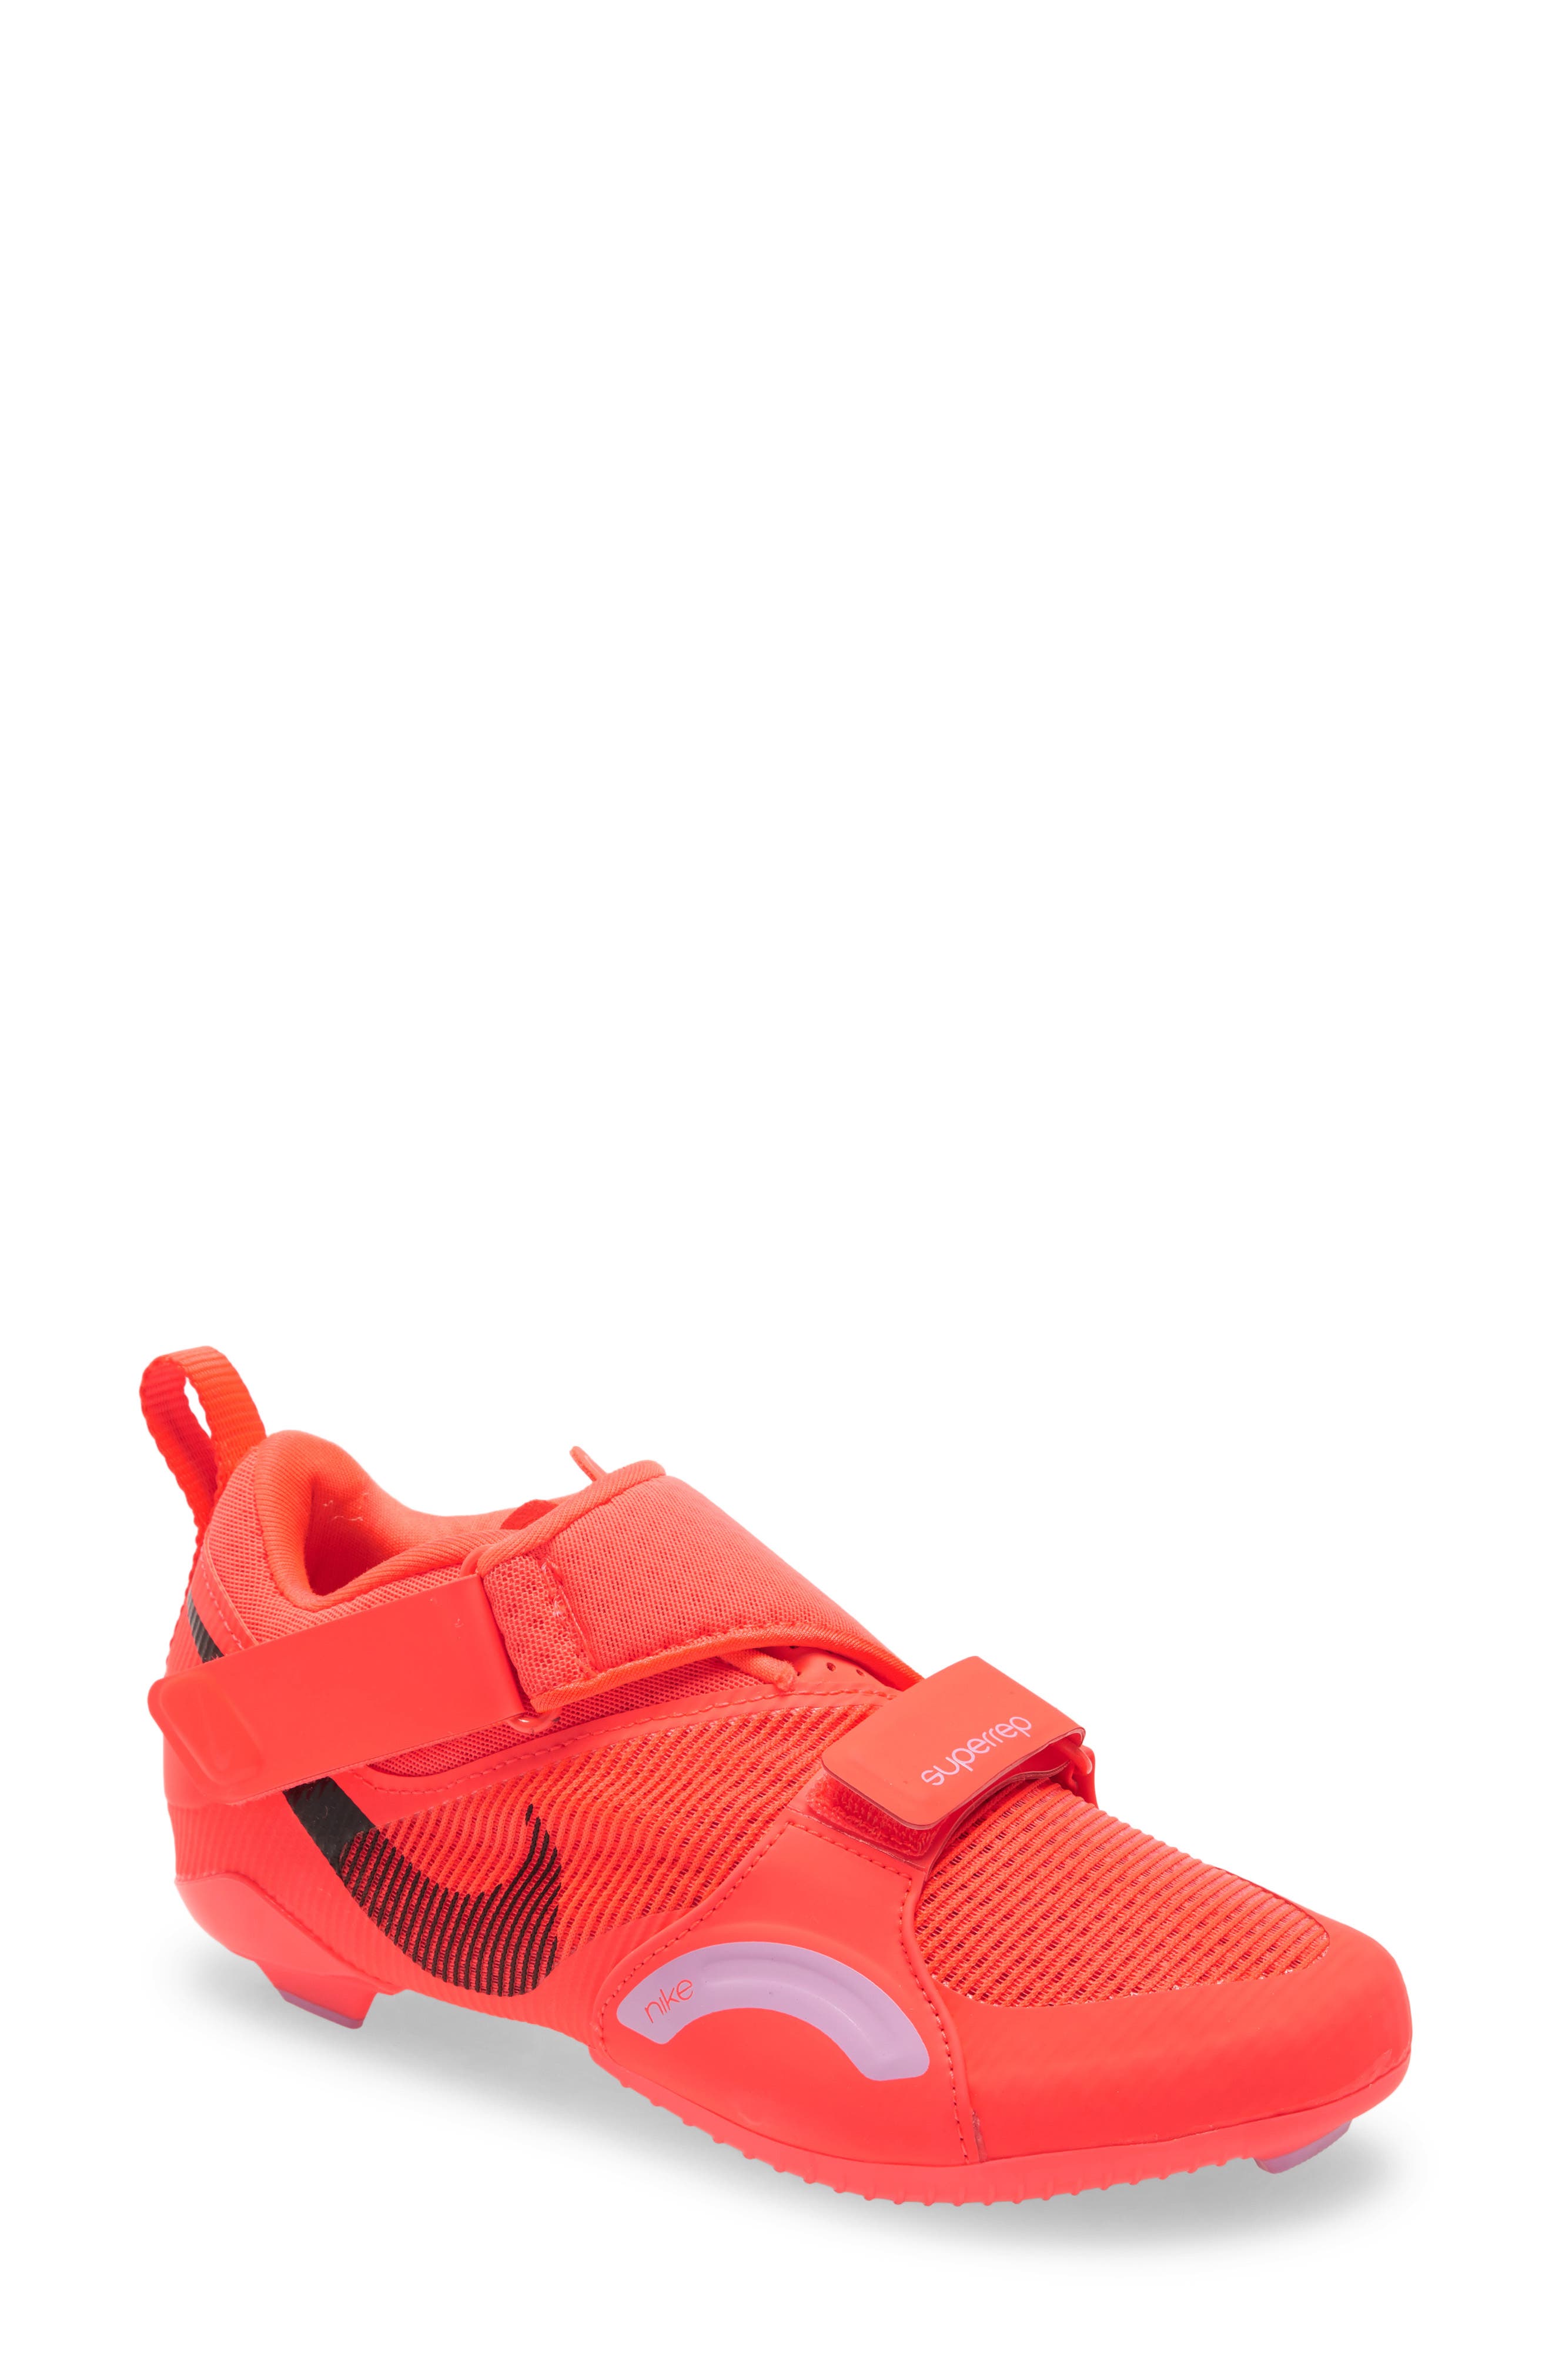 women's red sneakers on sale